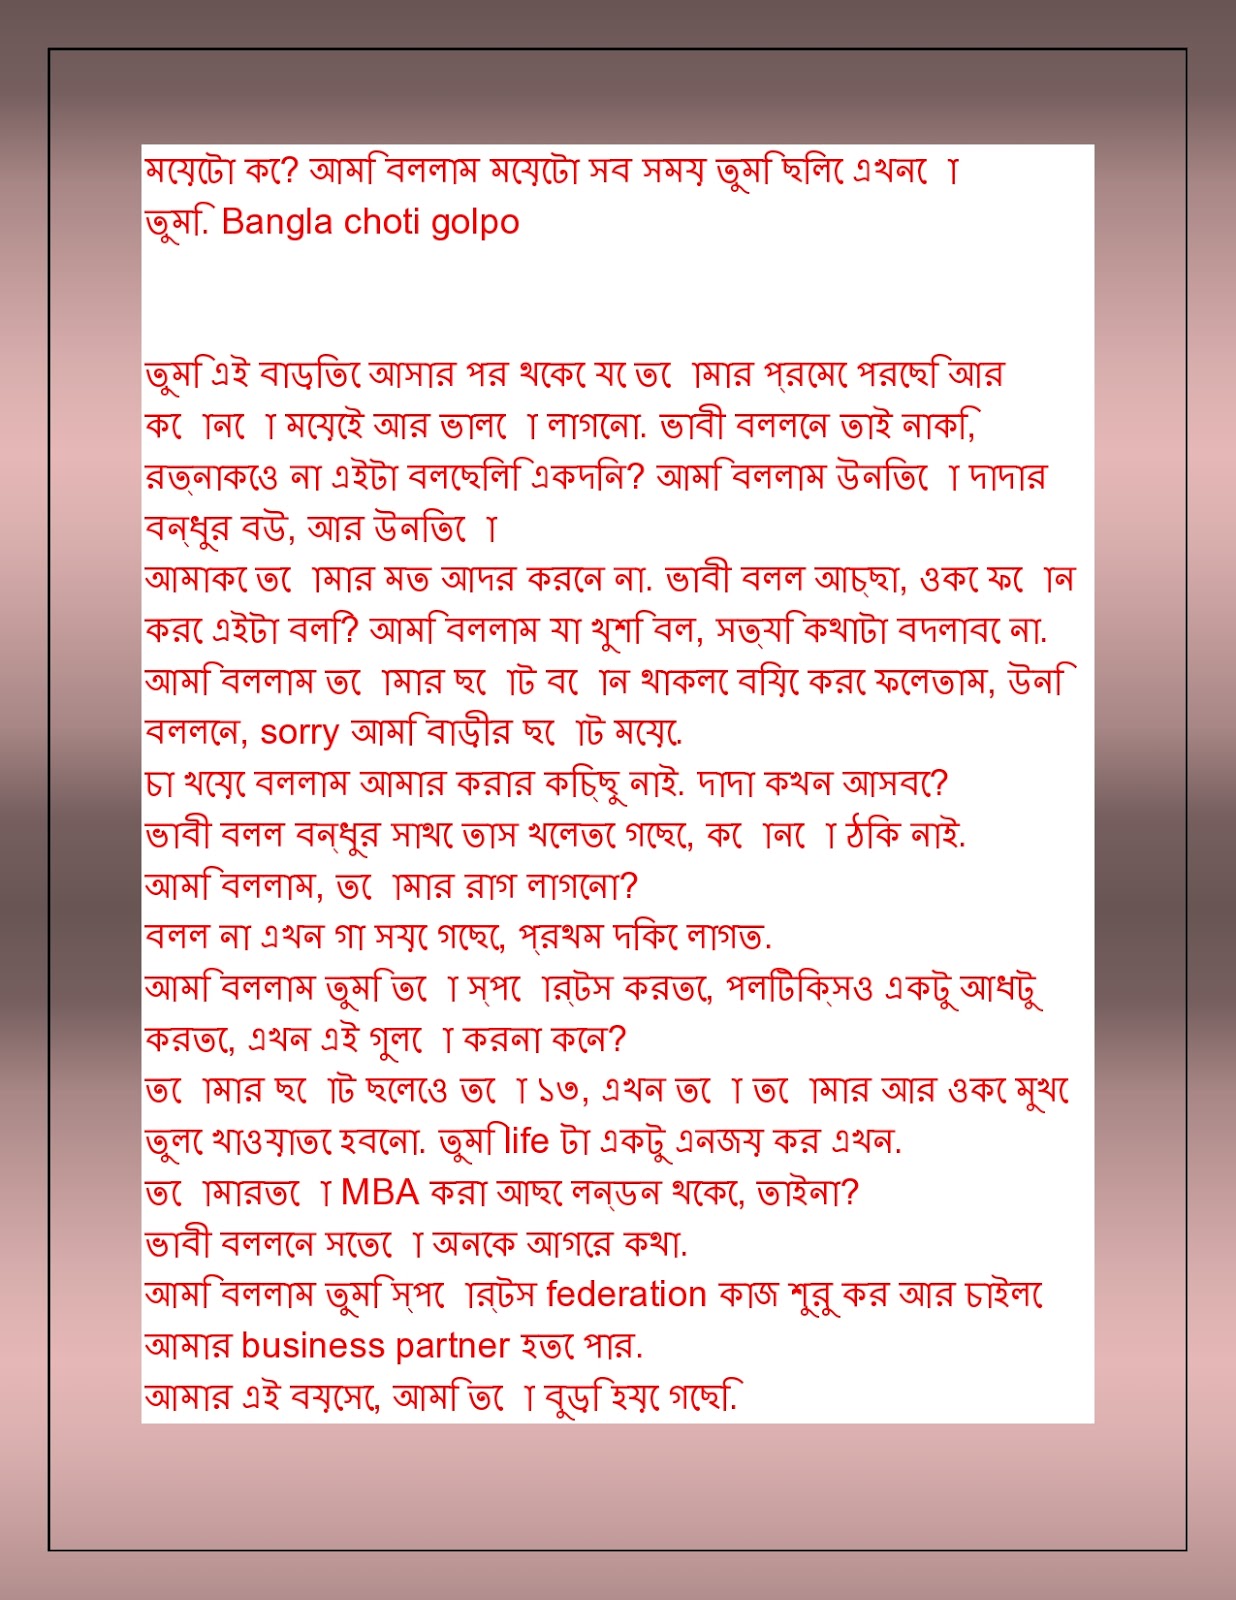 Bangla bhabi chodar golpo. 